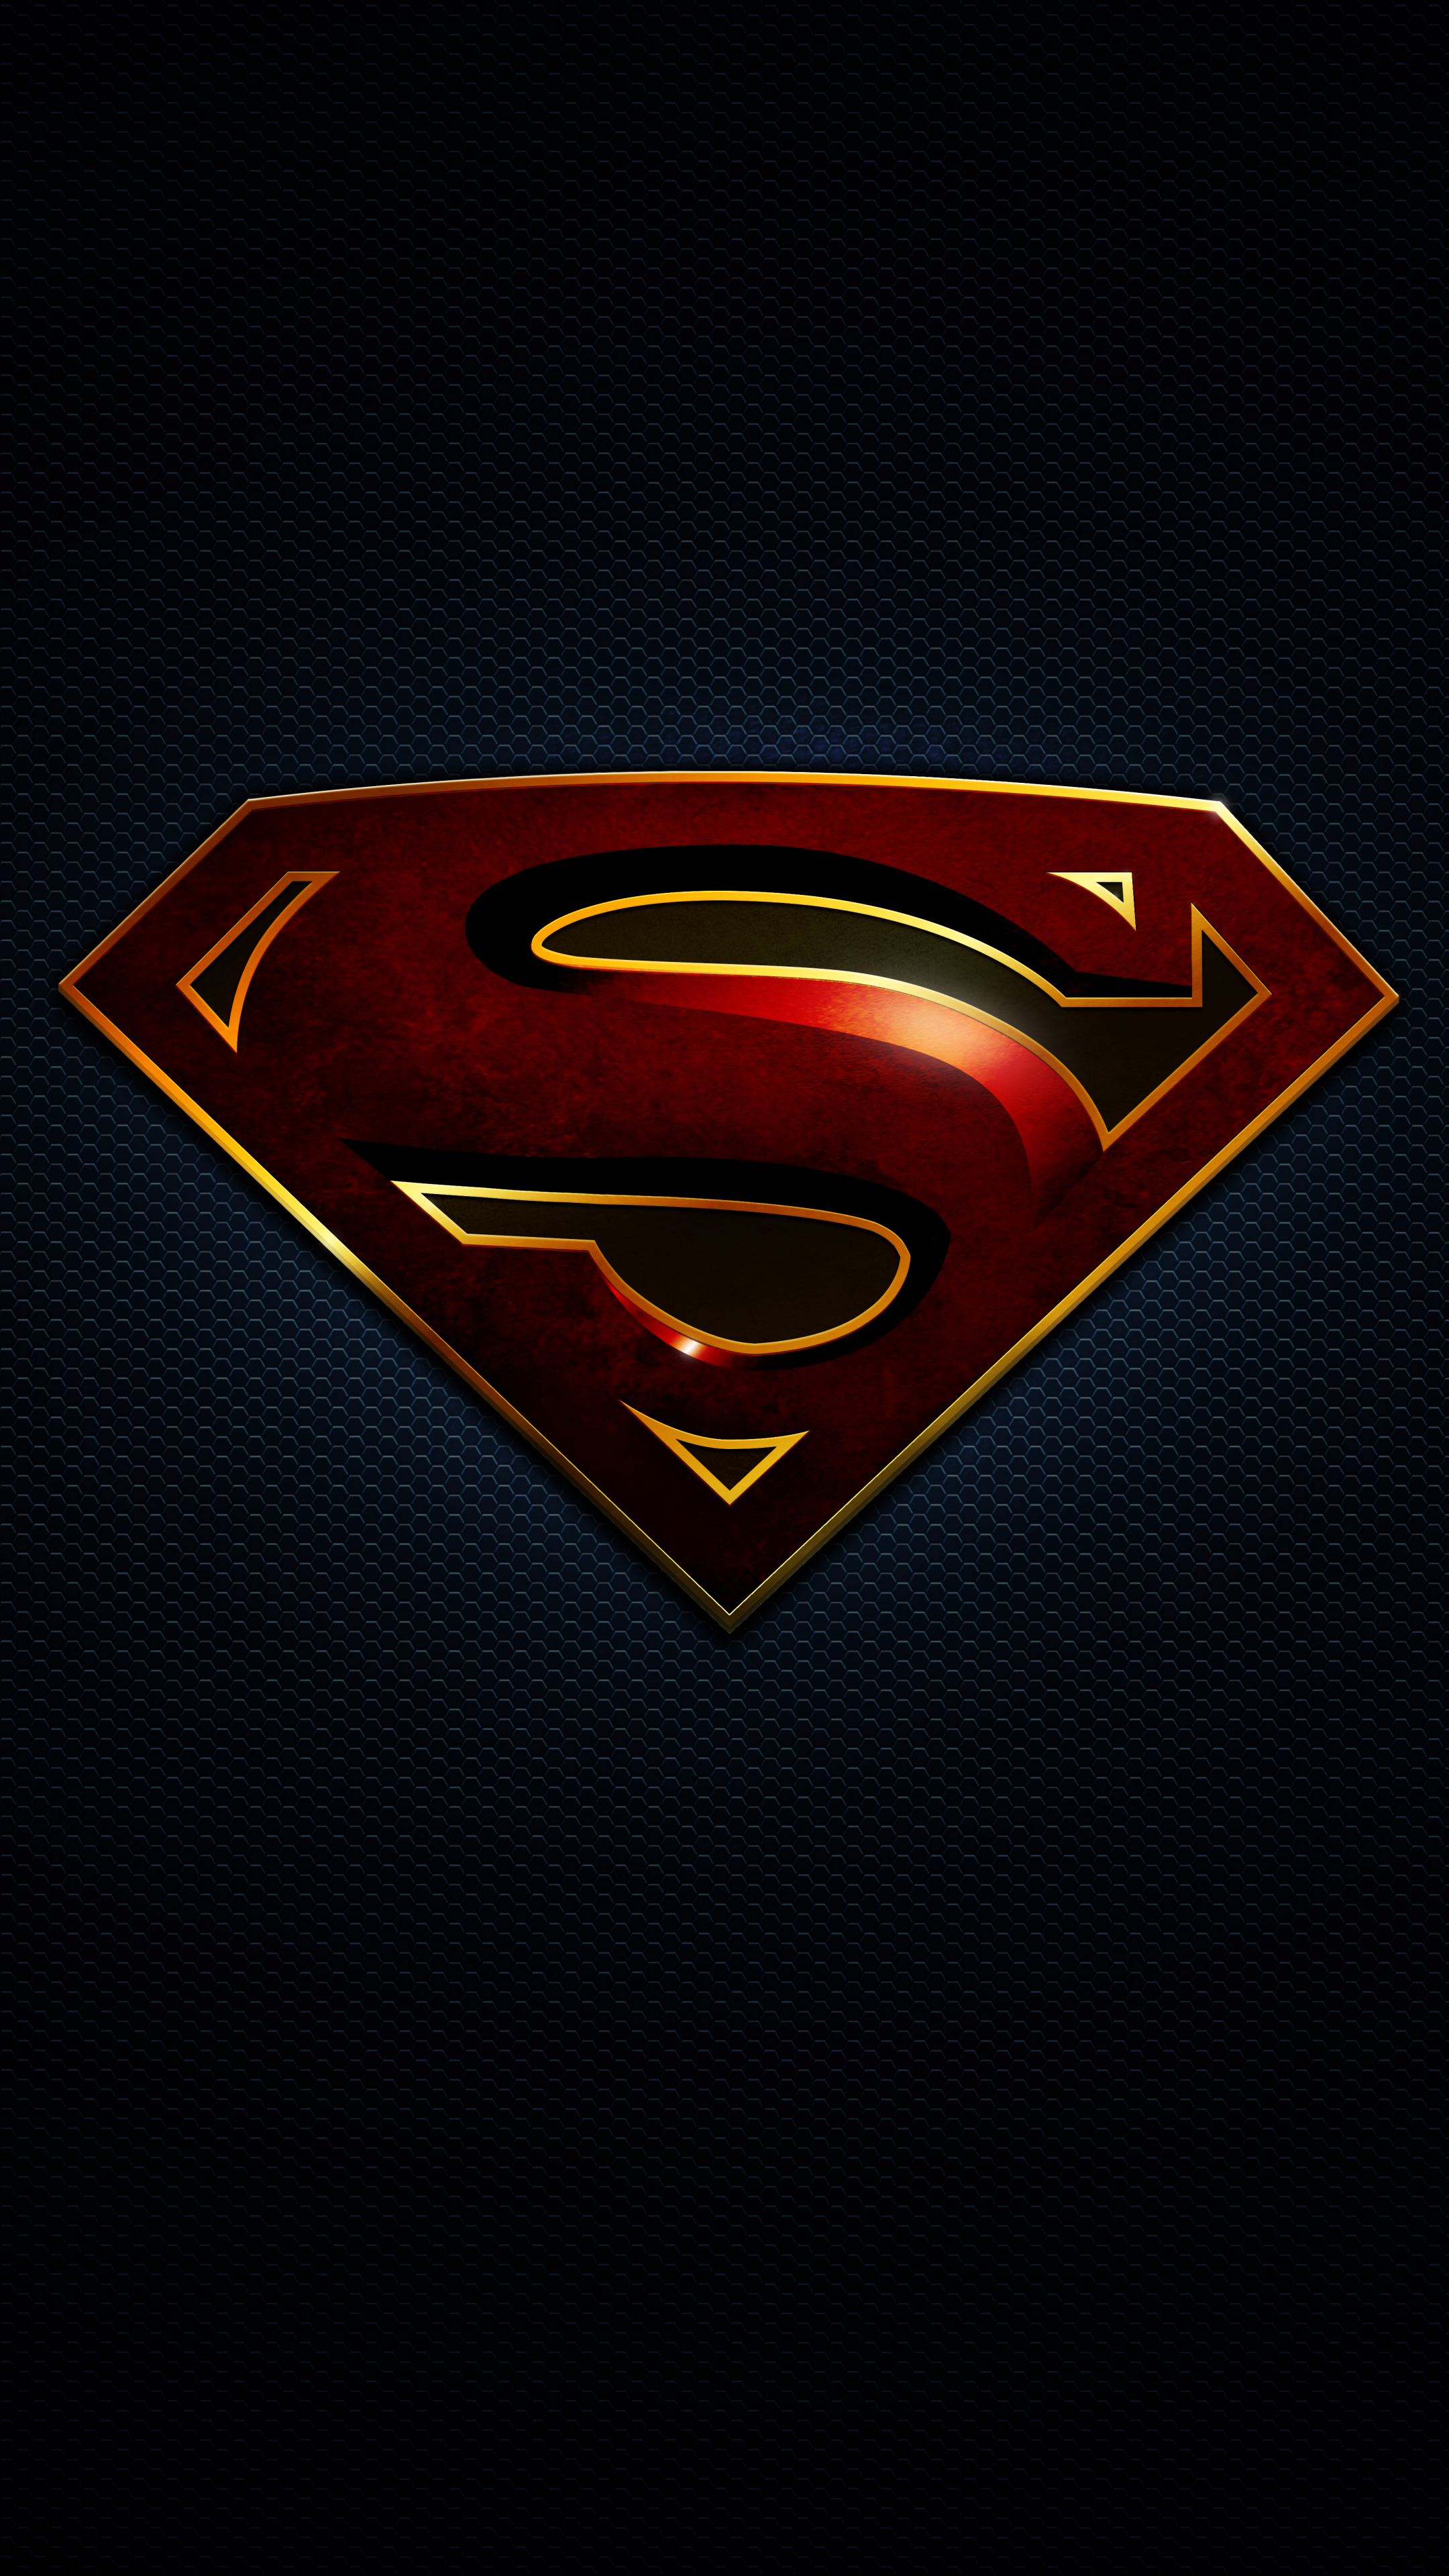 1080p Wallpaper  Superman Logo